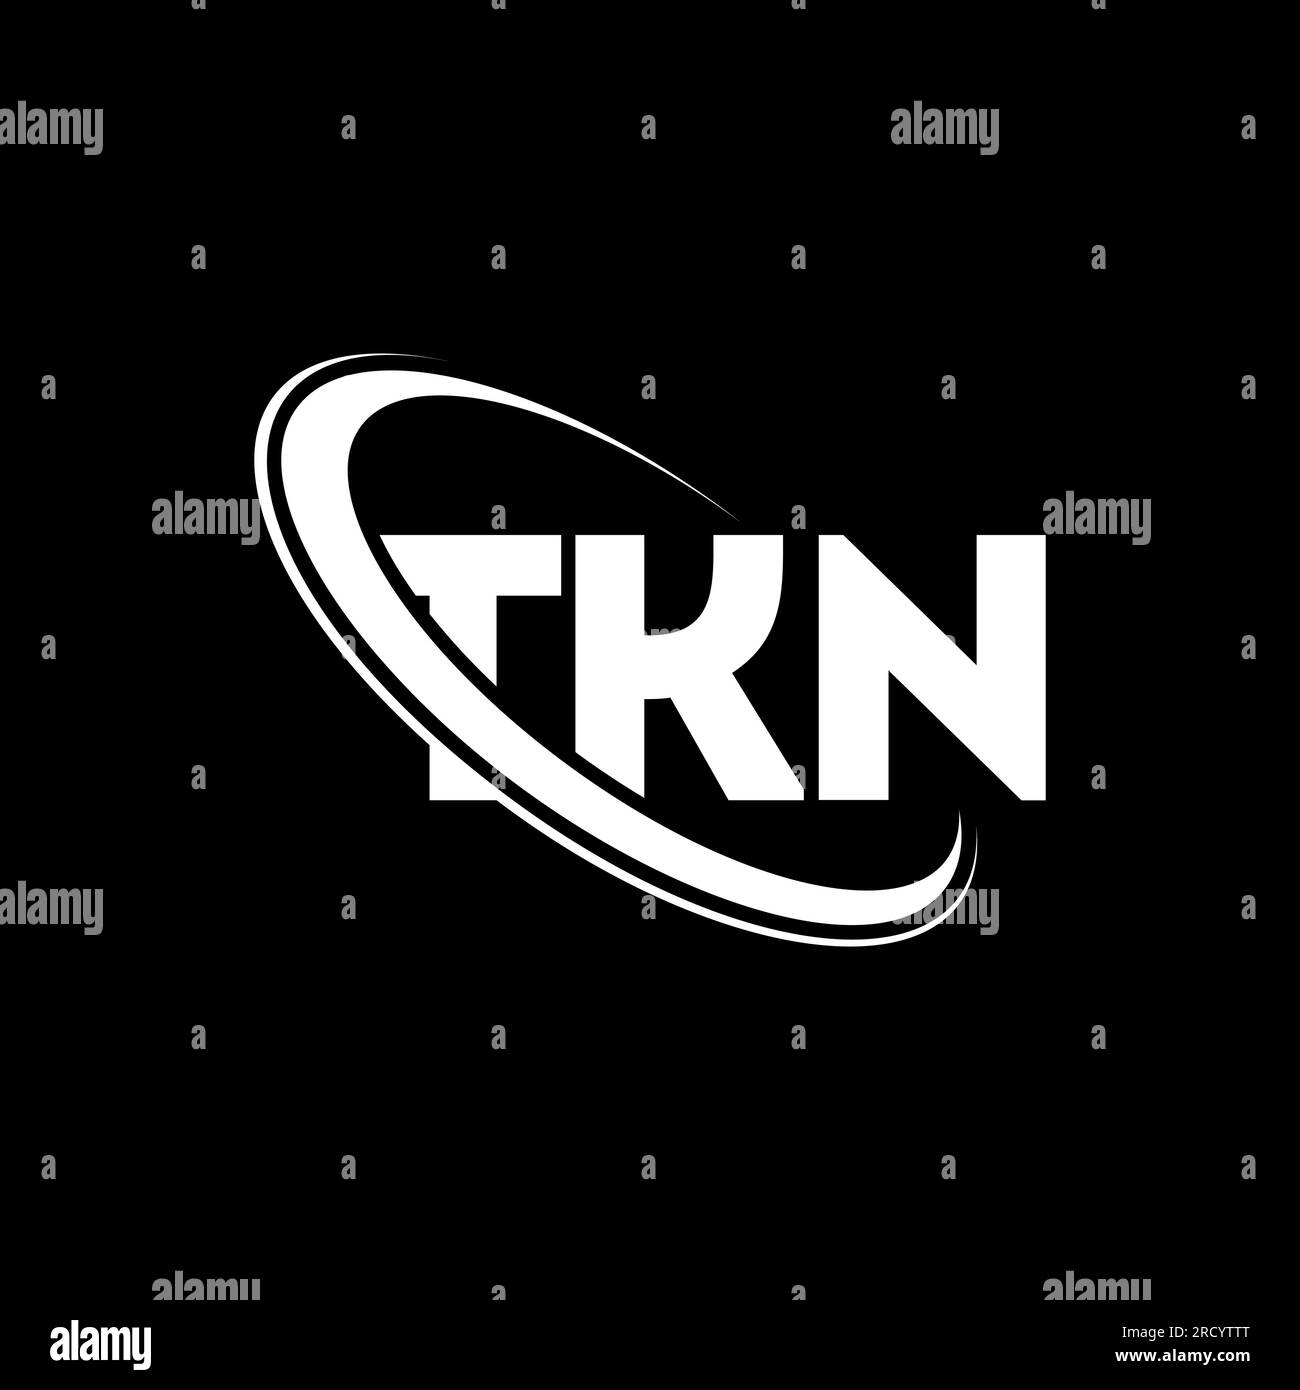 TKN logo. TKN letter. TKN letter logo design. Initials TKN logo linked with circle and uppercase monogram logo. TKN typography for technology, busines Stock Vector